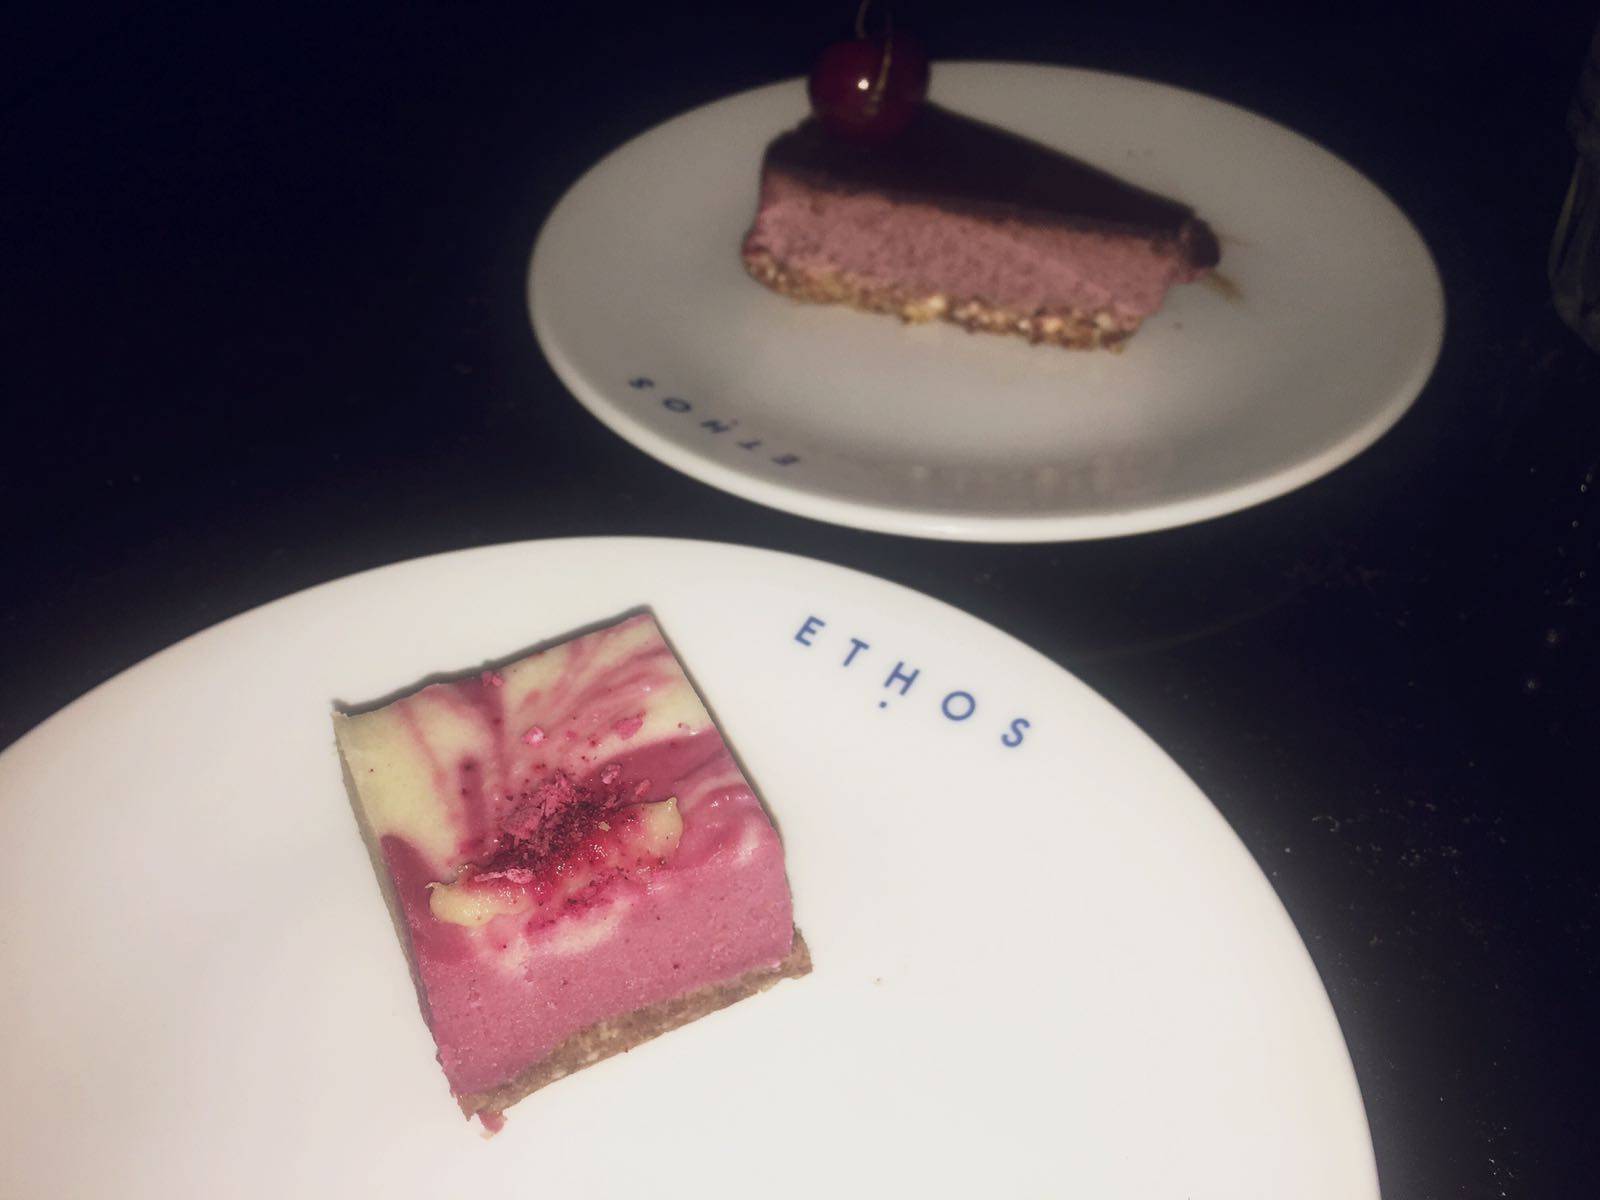 Ethos Desserts London Oxford Street Vegan Vegetarian Restaurant Review Blogger